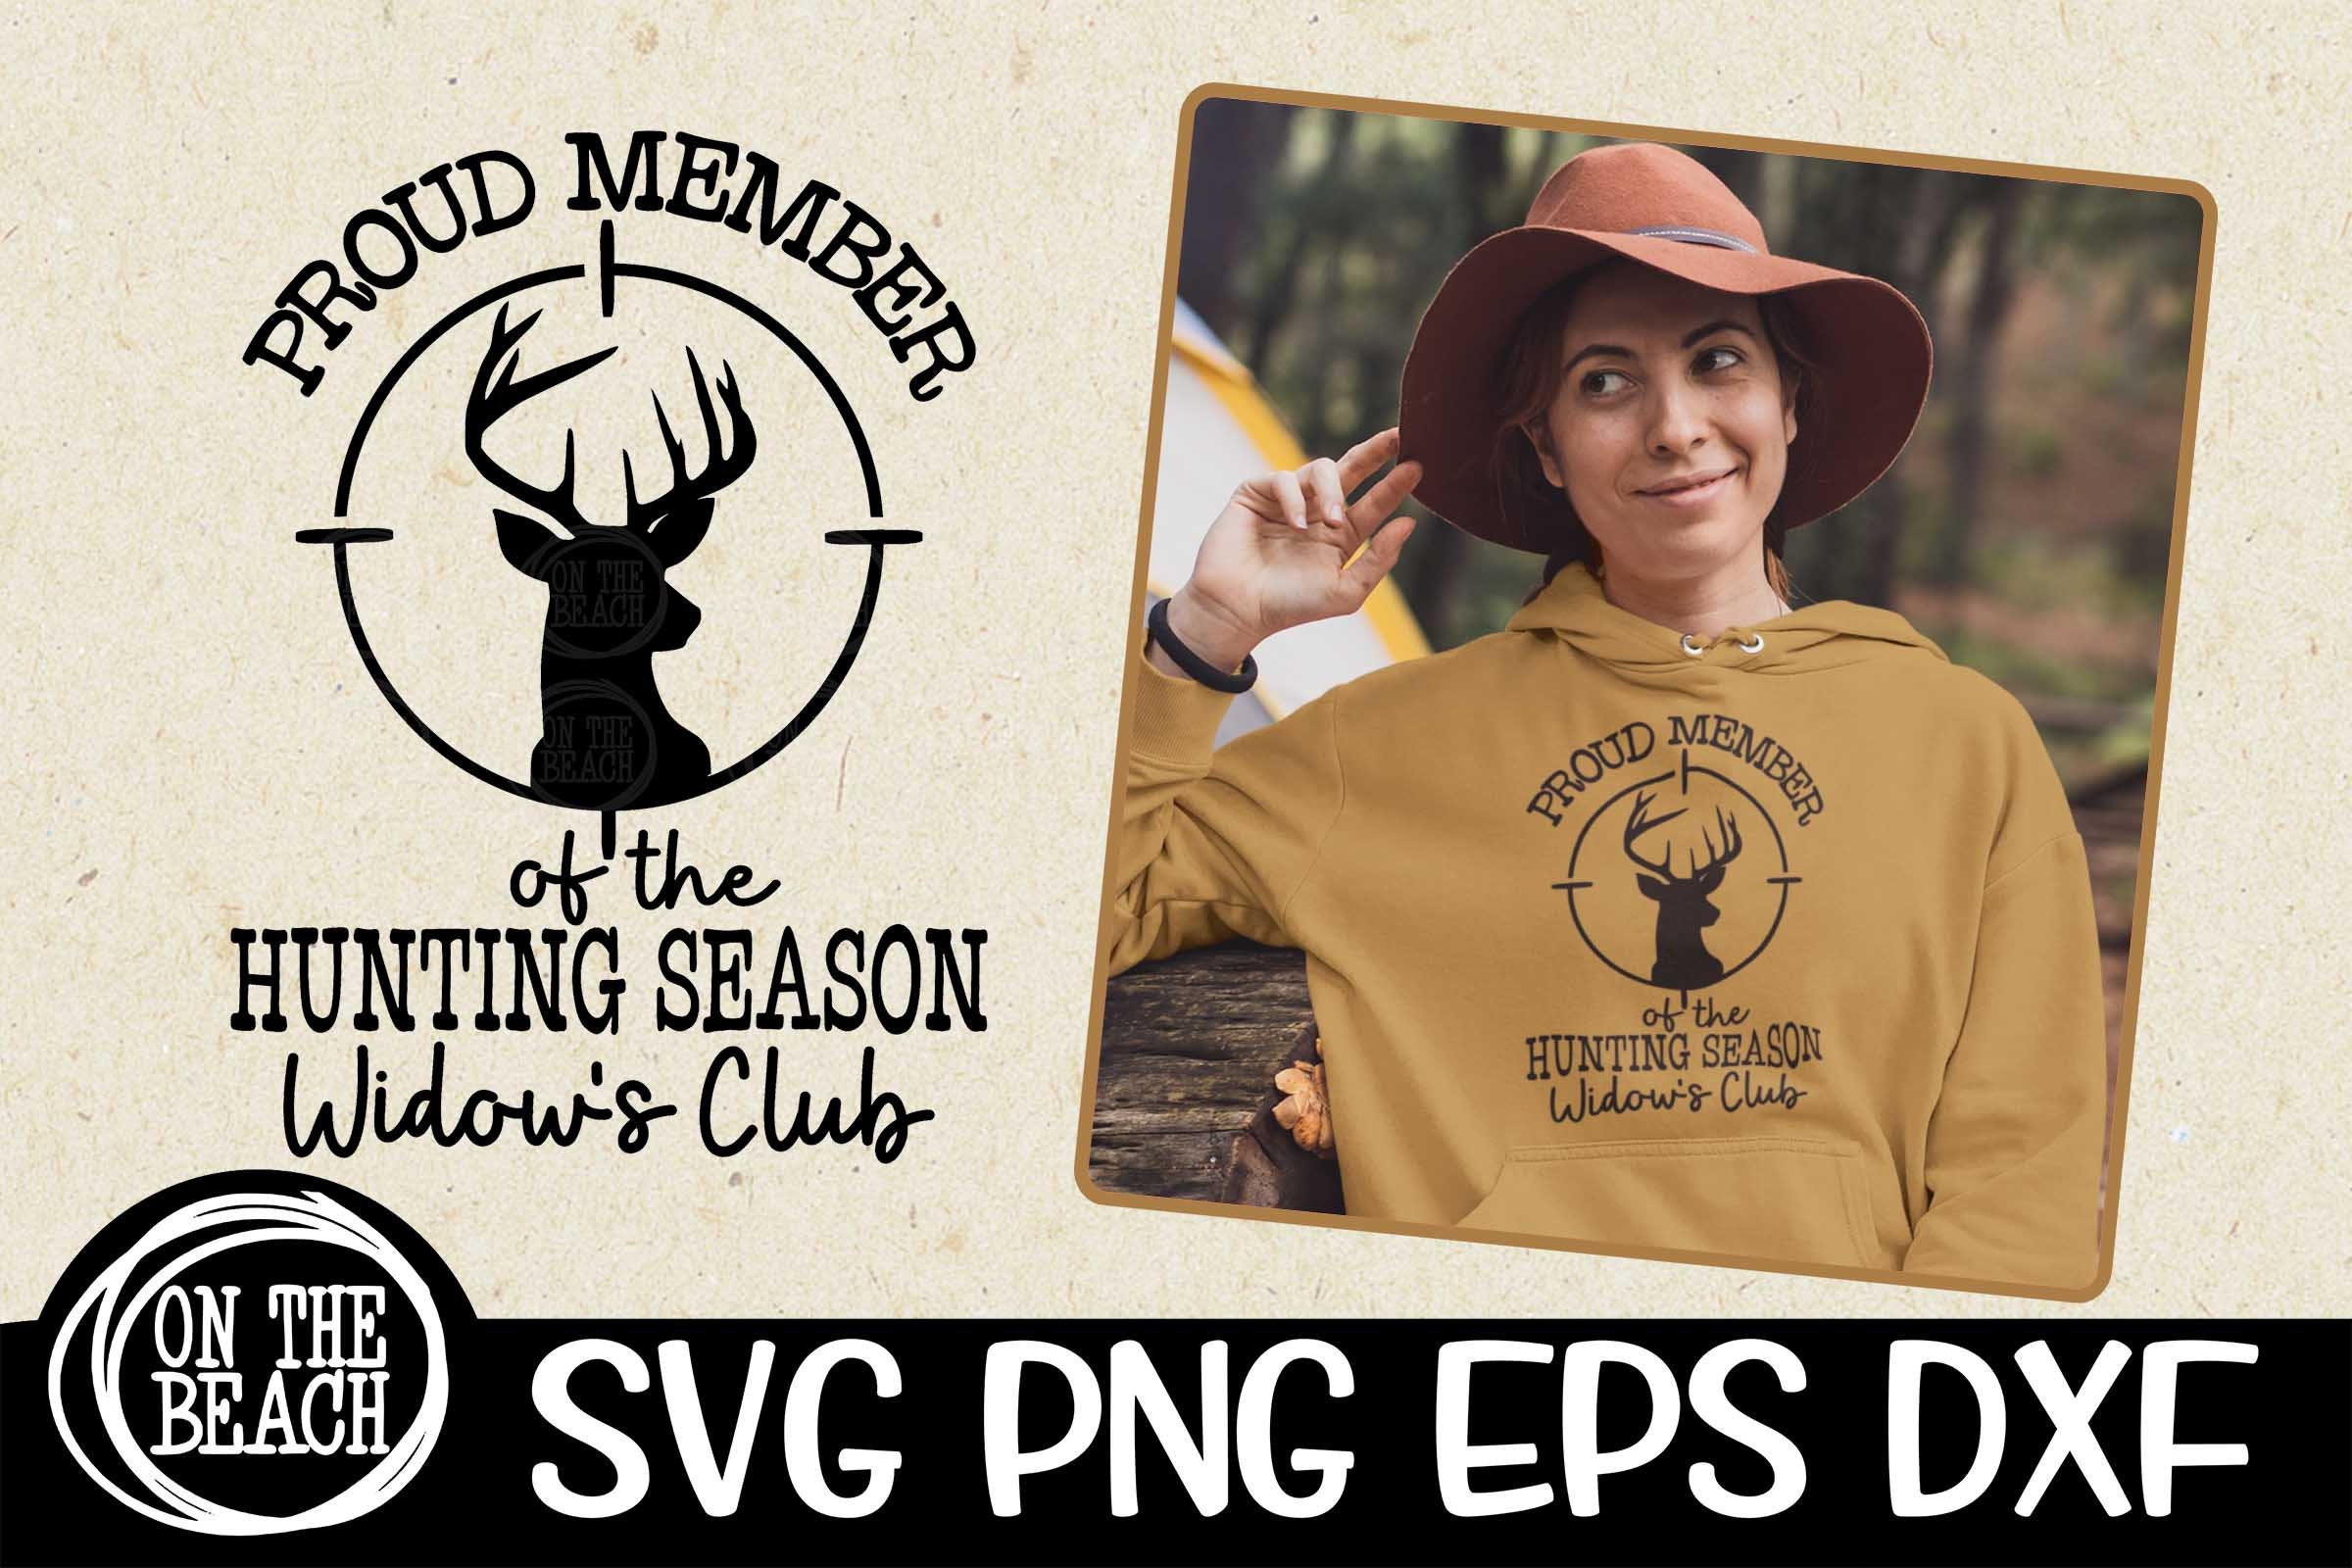 Prime Video: Deer Squad Temporada 2